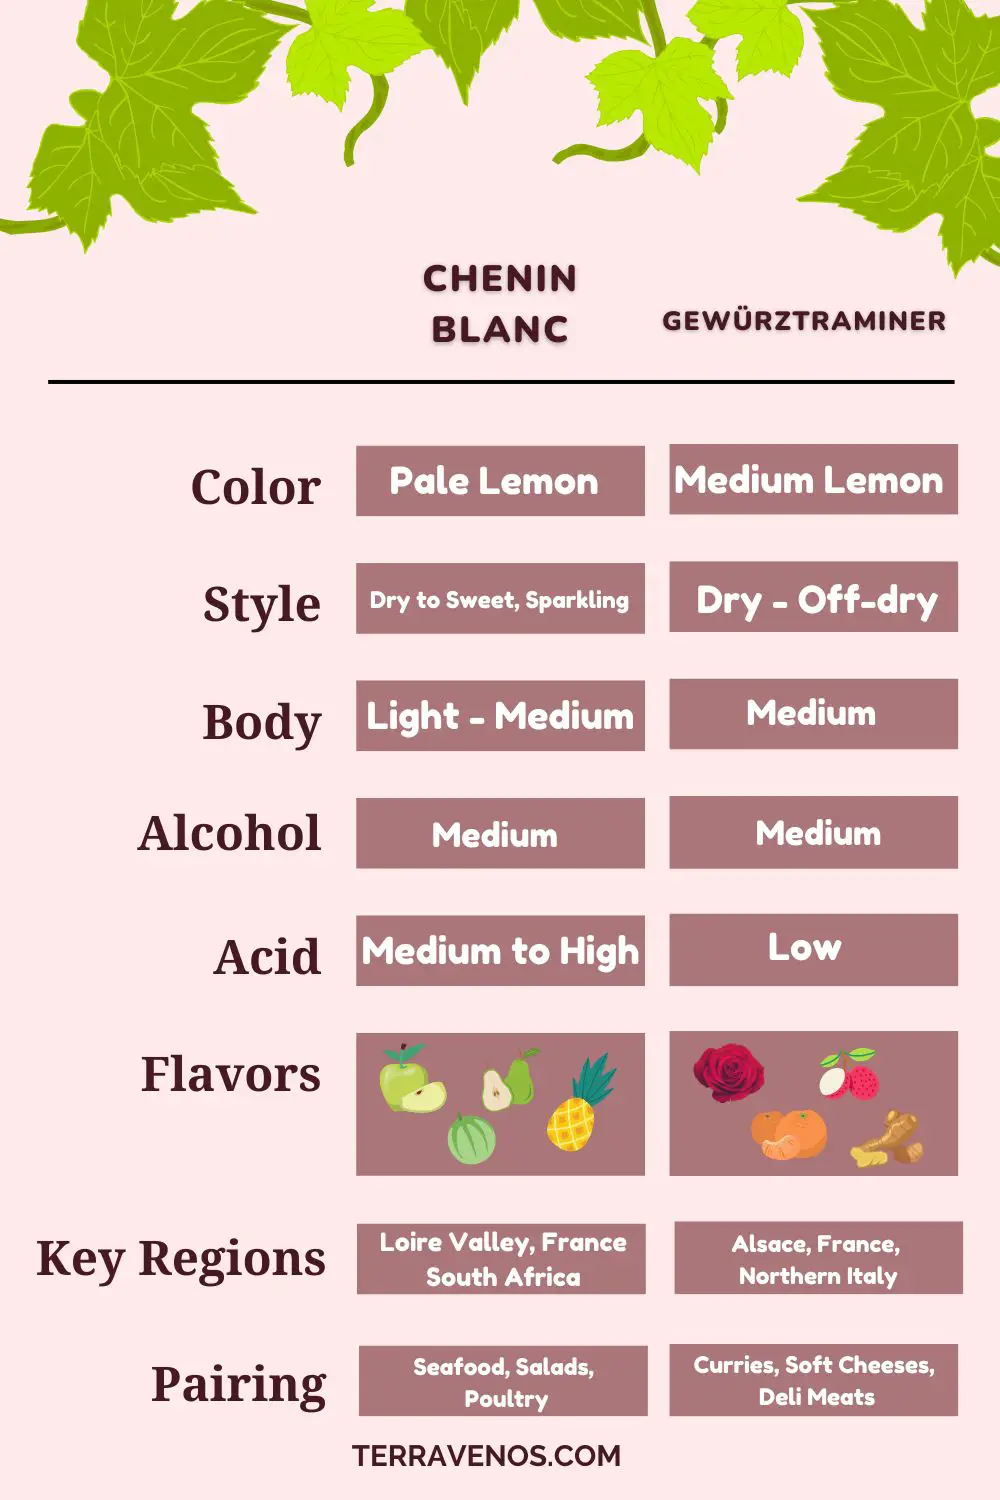 chenin Blanc vs gewurztraminer wine comparison infographic